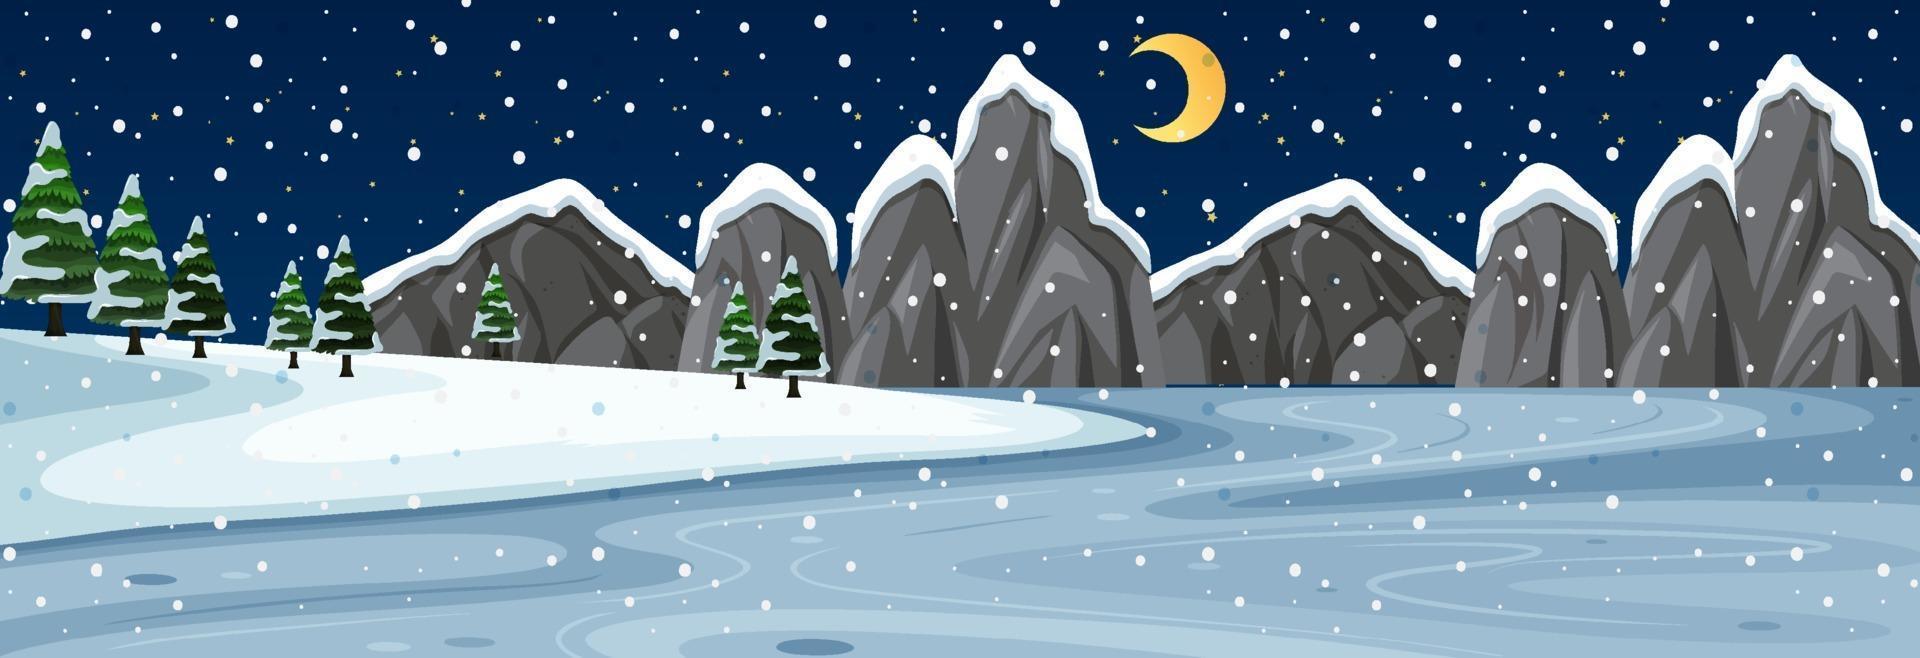 Schneehorizontalszene mit Berglandschaft bei Nacht vektor